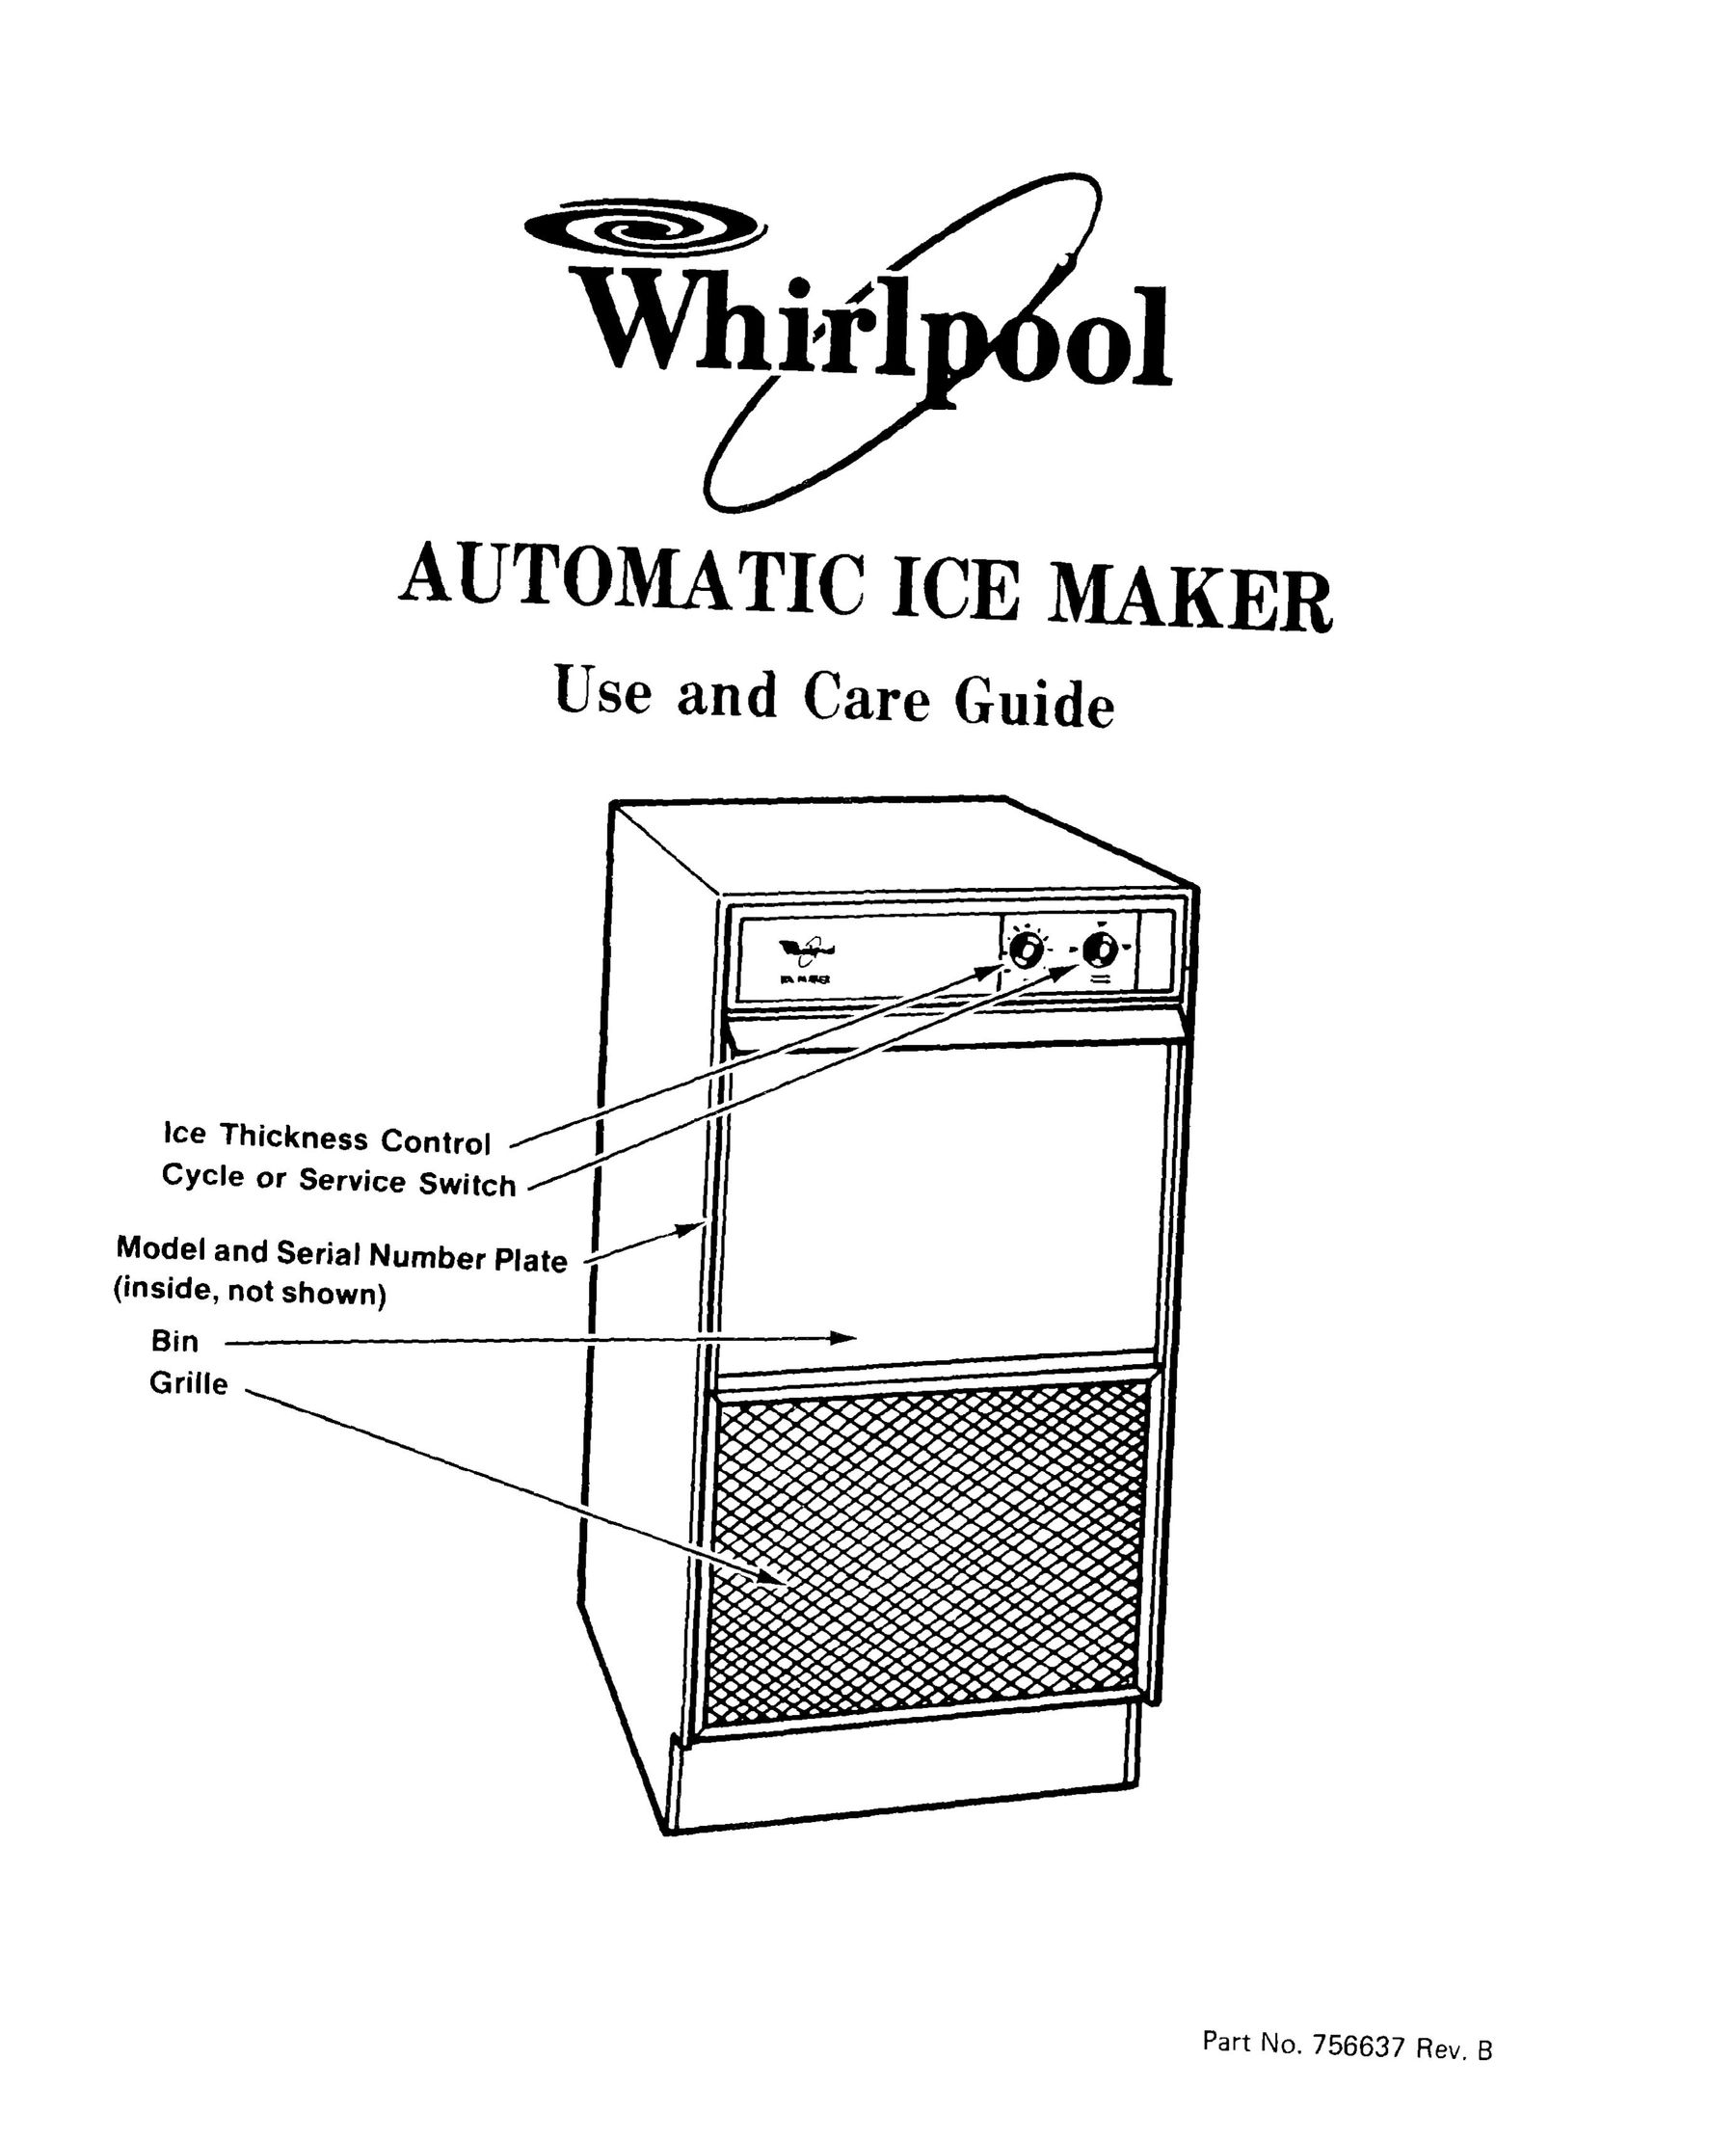 Whirlpool EHC511 Ice Maker User Manual